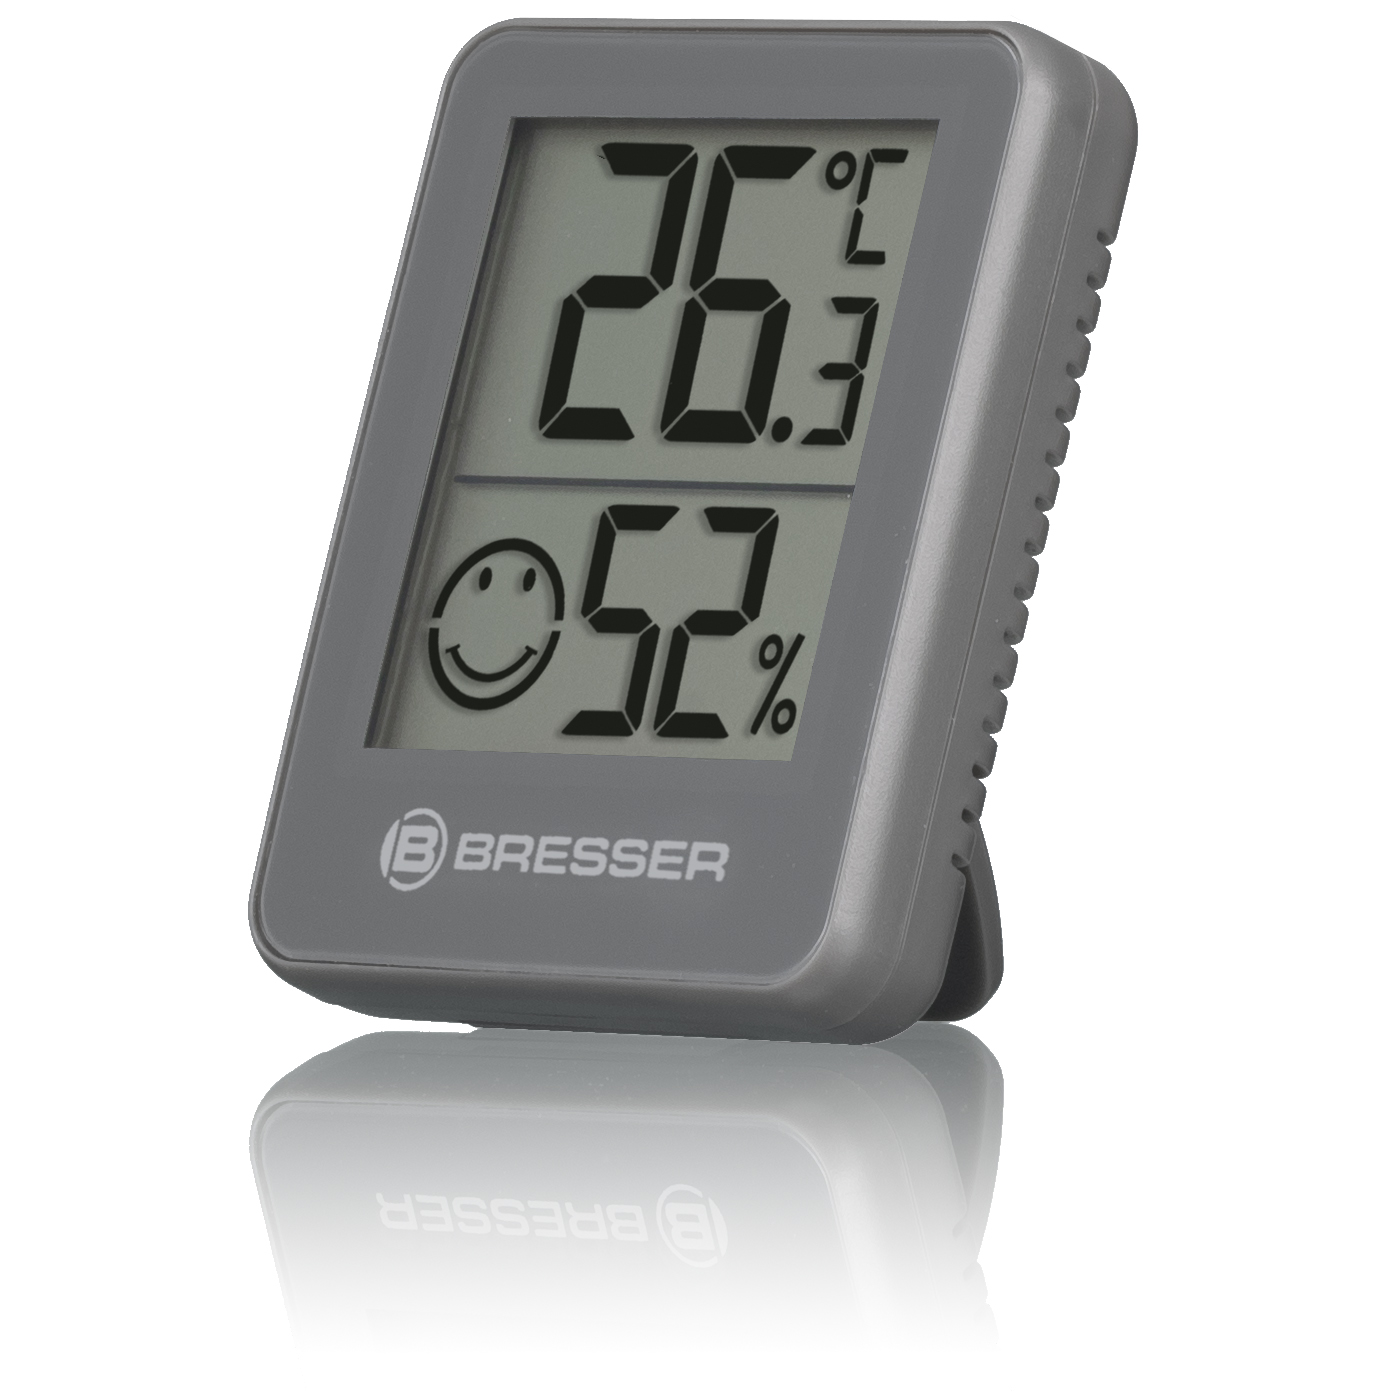 Hygro Thermo-/Hygrometer Indikator BRESSER Temeo 6er-Set Wetterstation